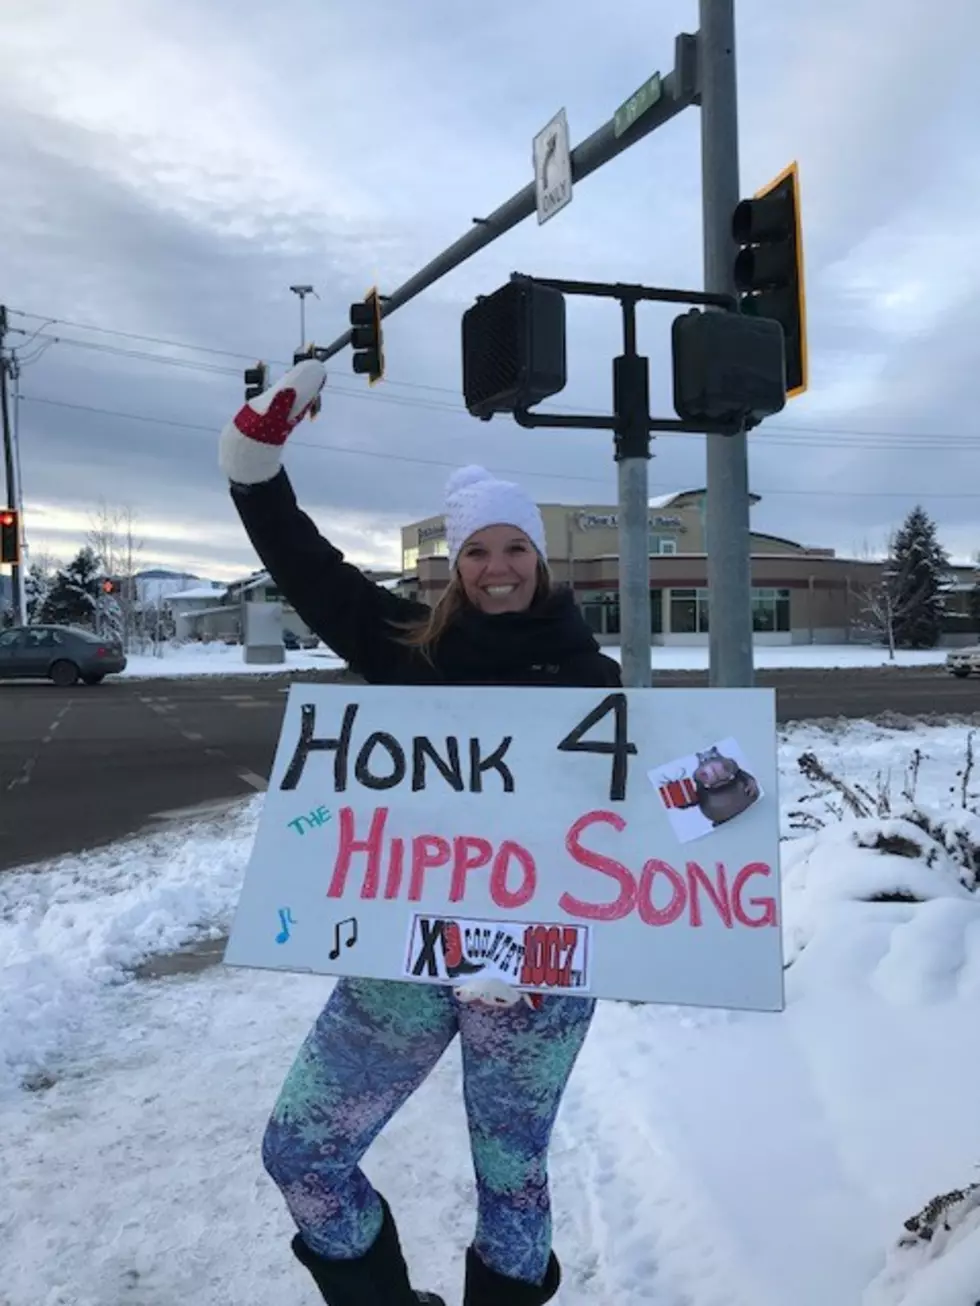 Honk for the Hippo Song [Photos]